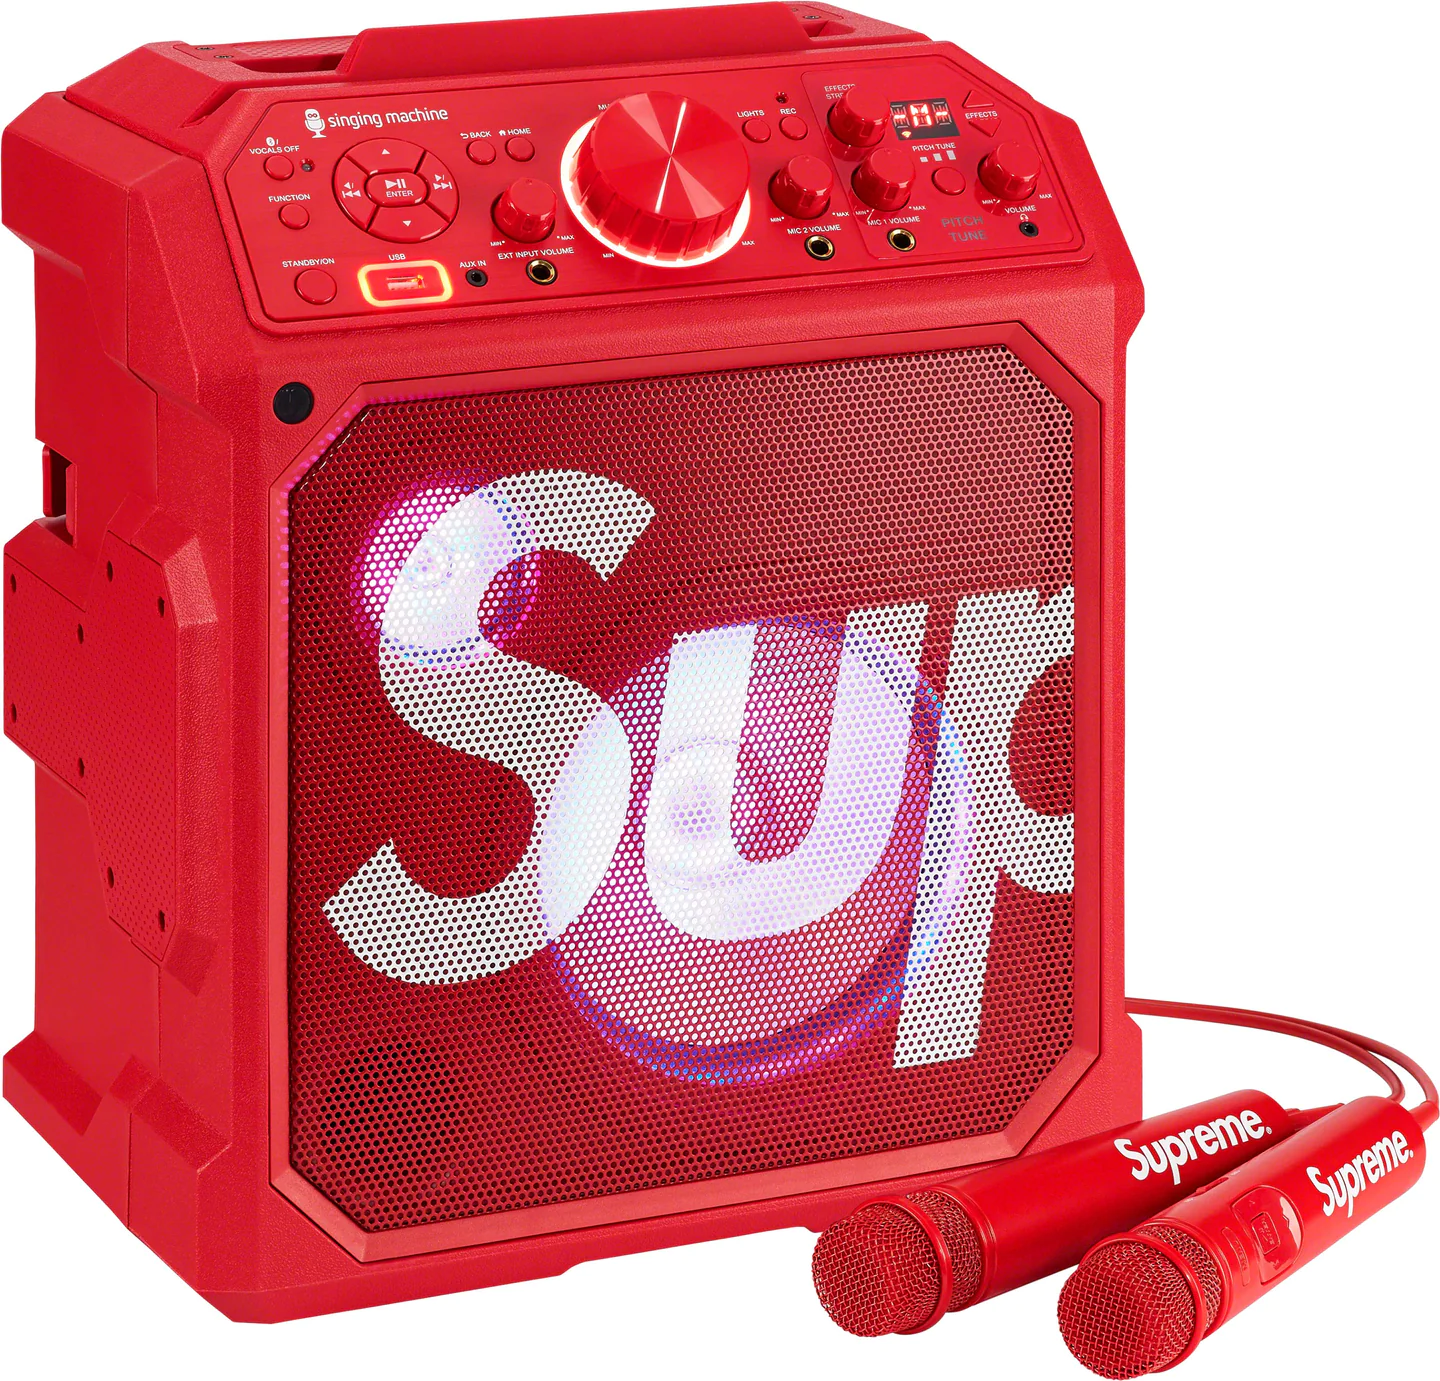 Supreme Supreme®/Singing Machine®